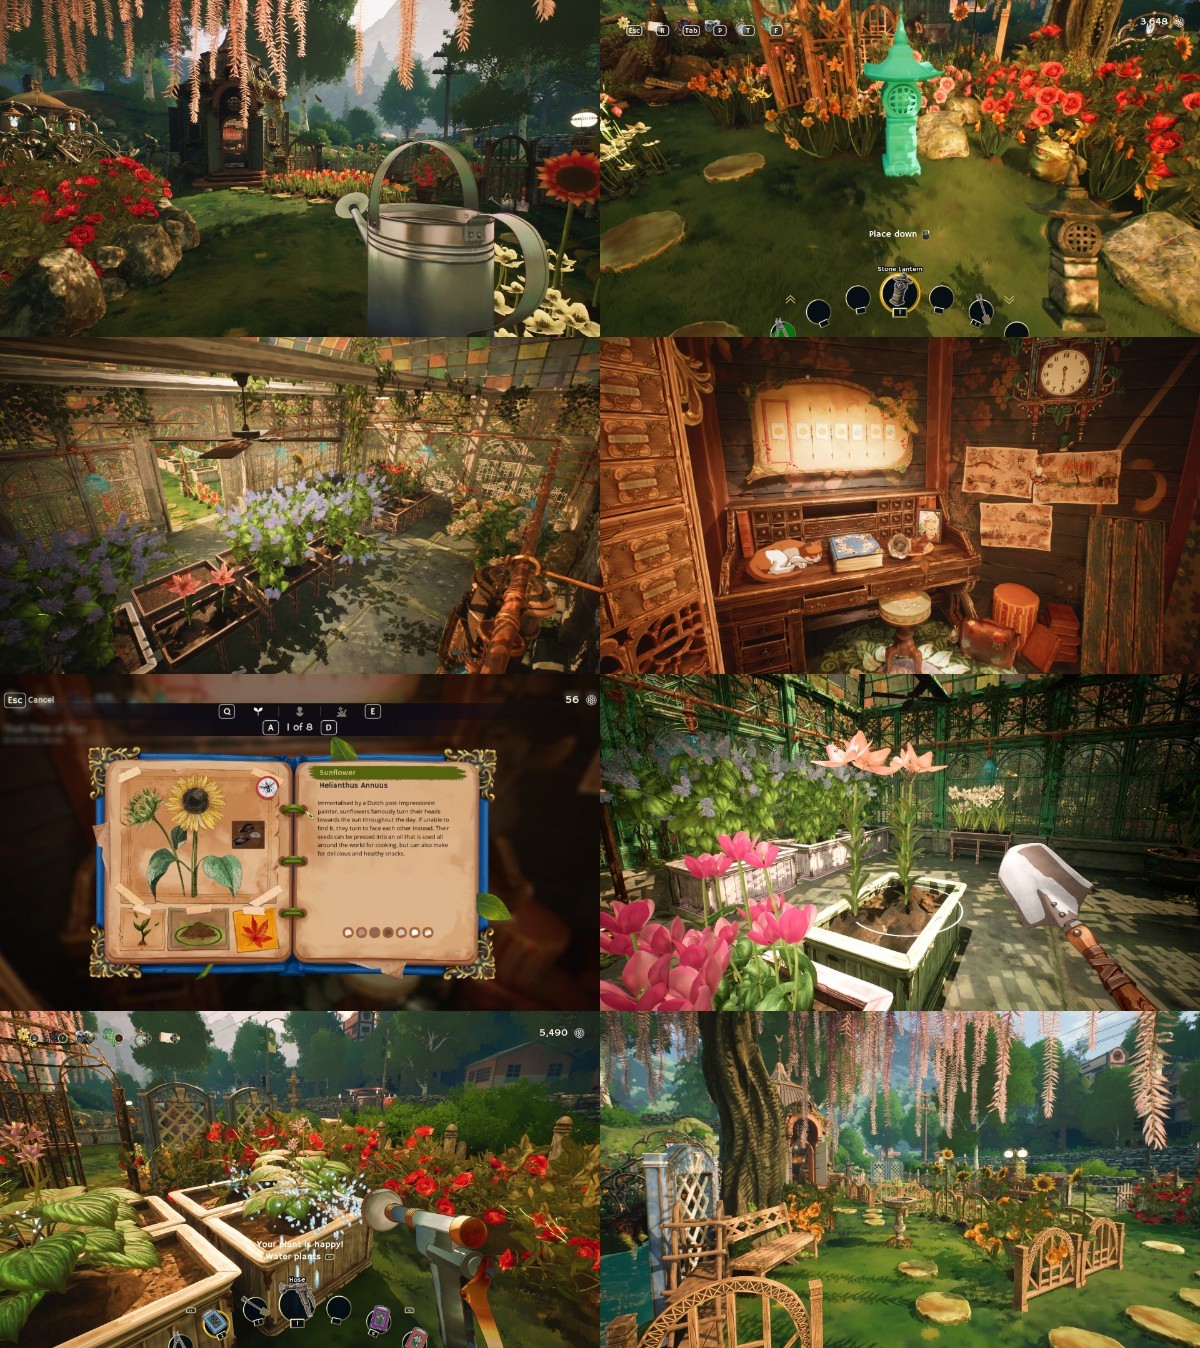 Garden Life - A Cozy Simulator [FitGirl Repack]